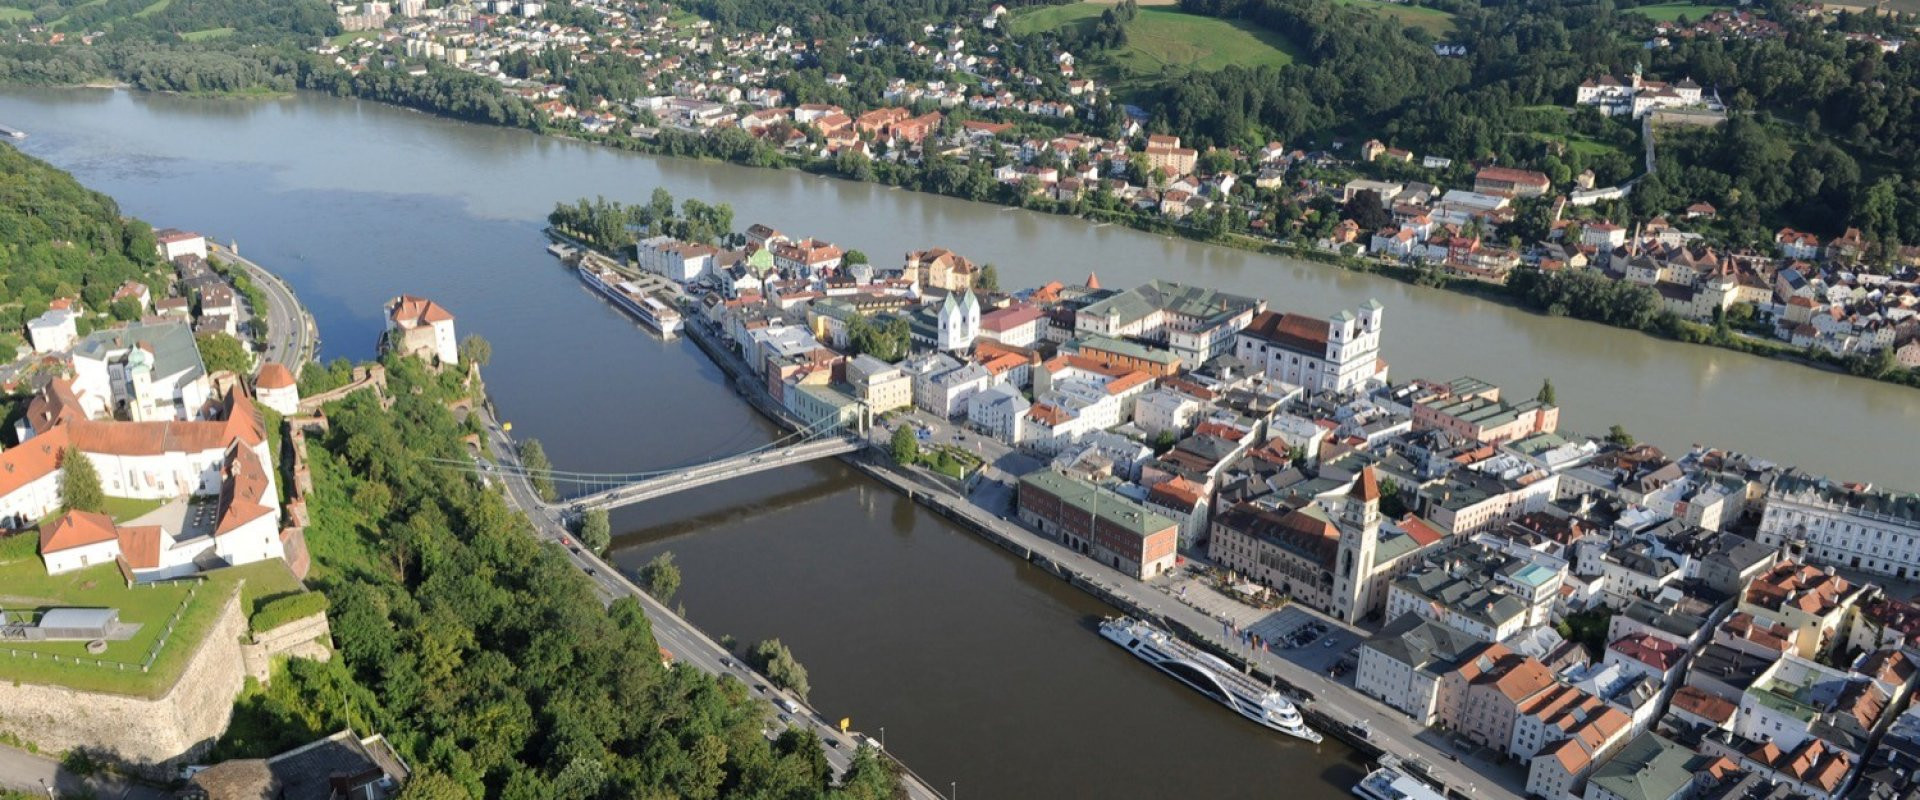 Handwerk Passau
 CMP City Marketing Passau